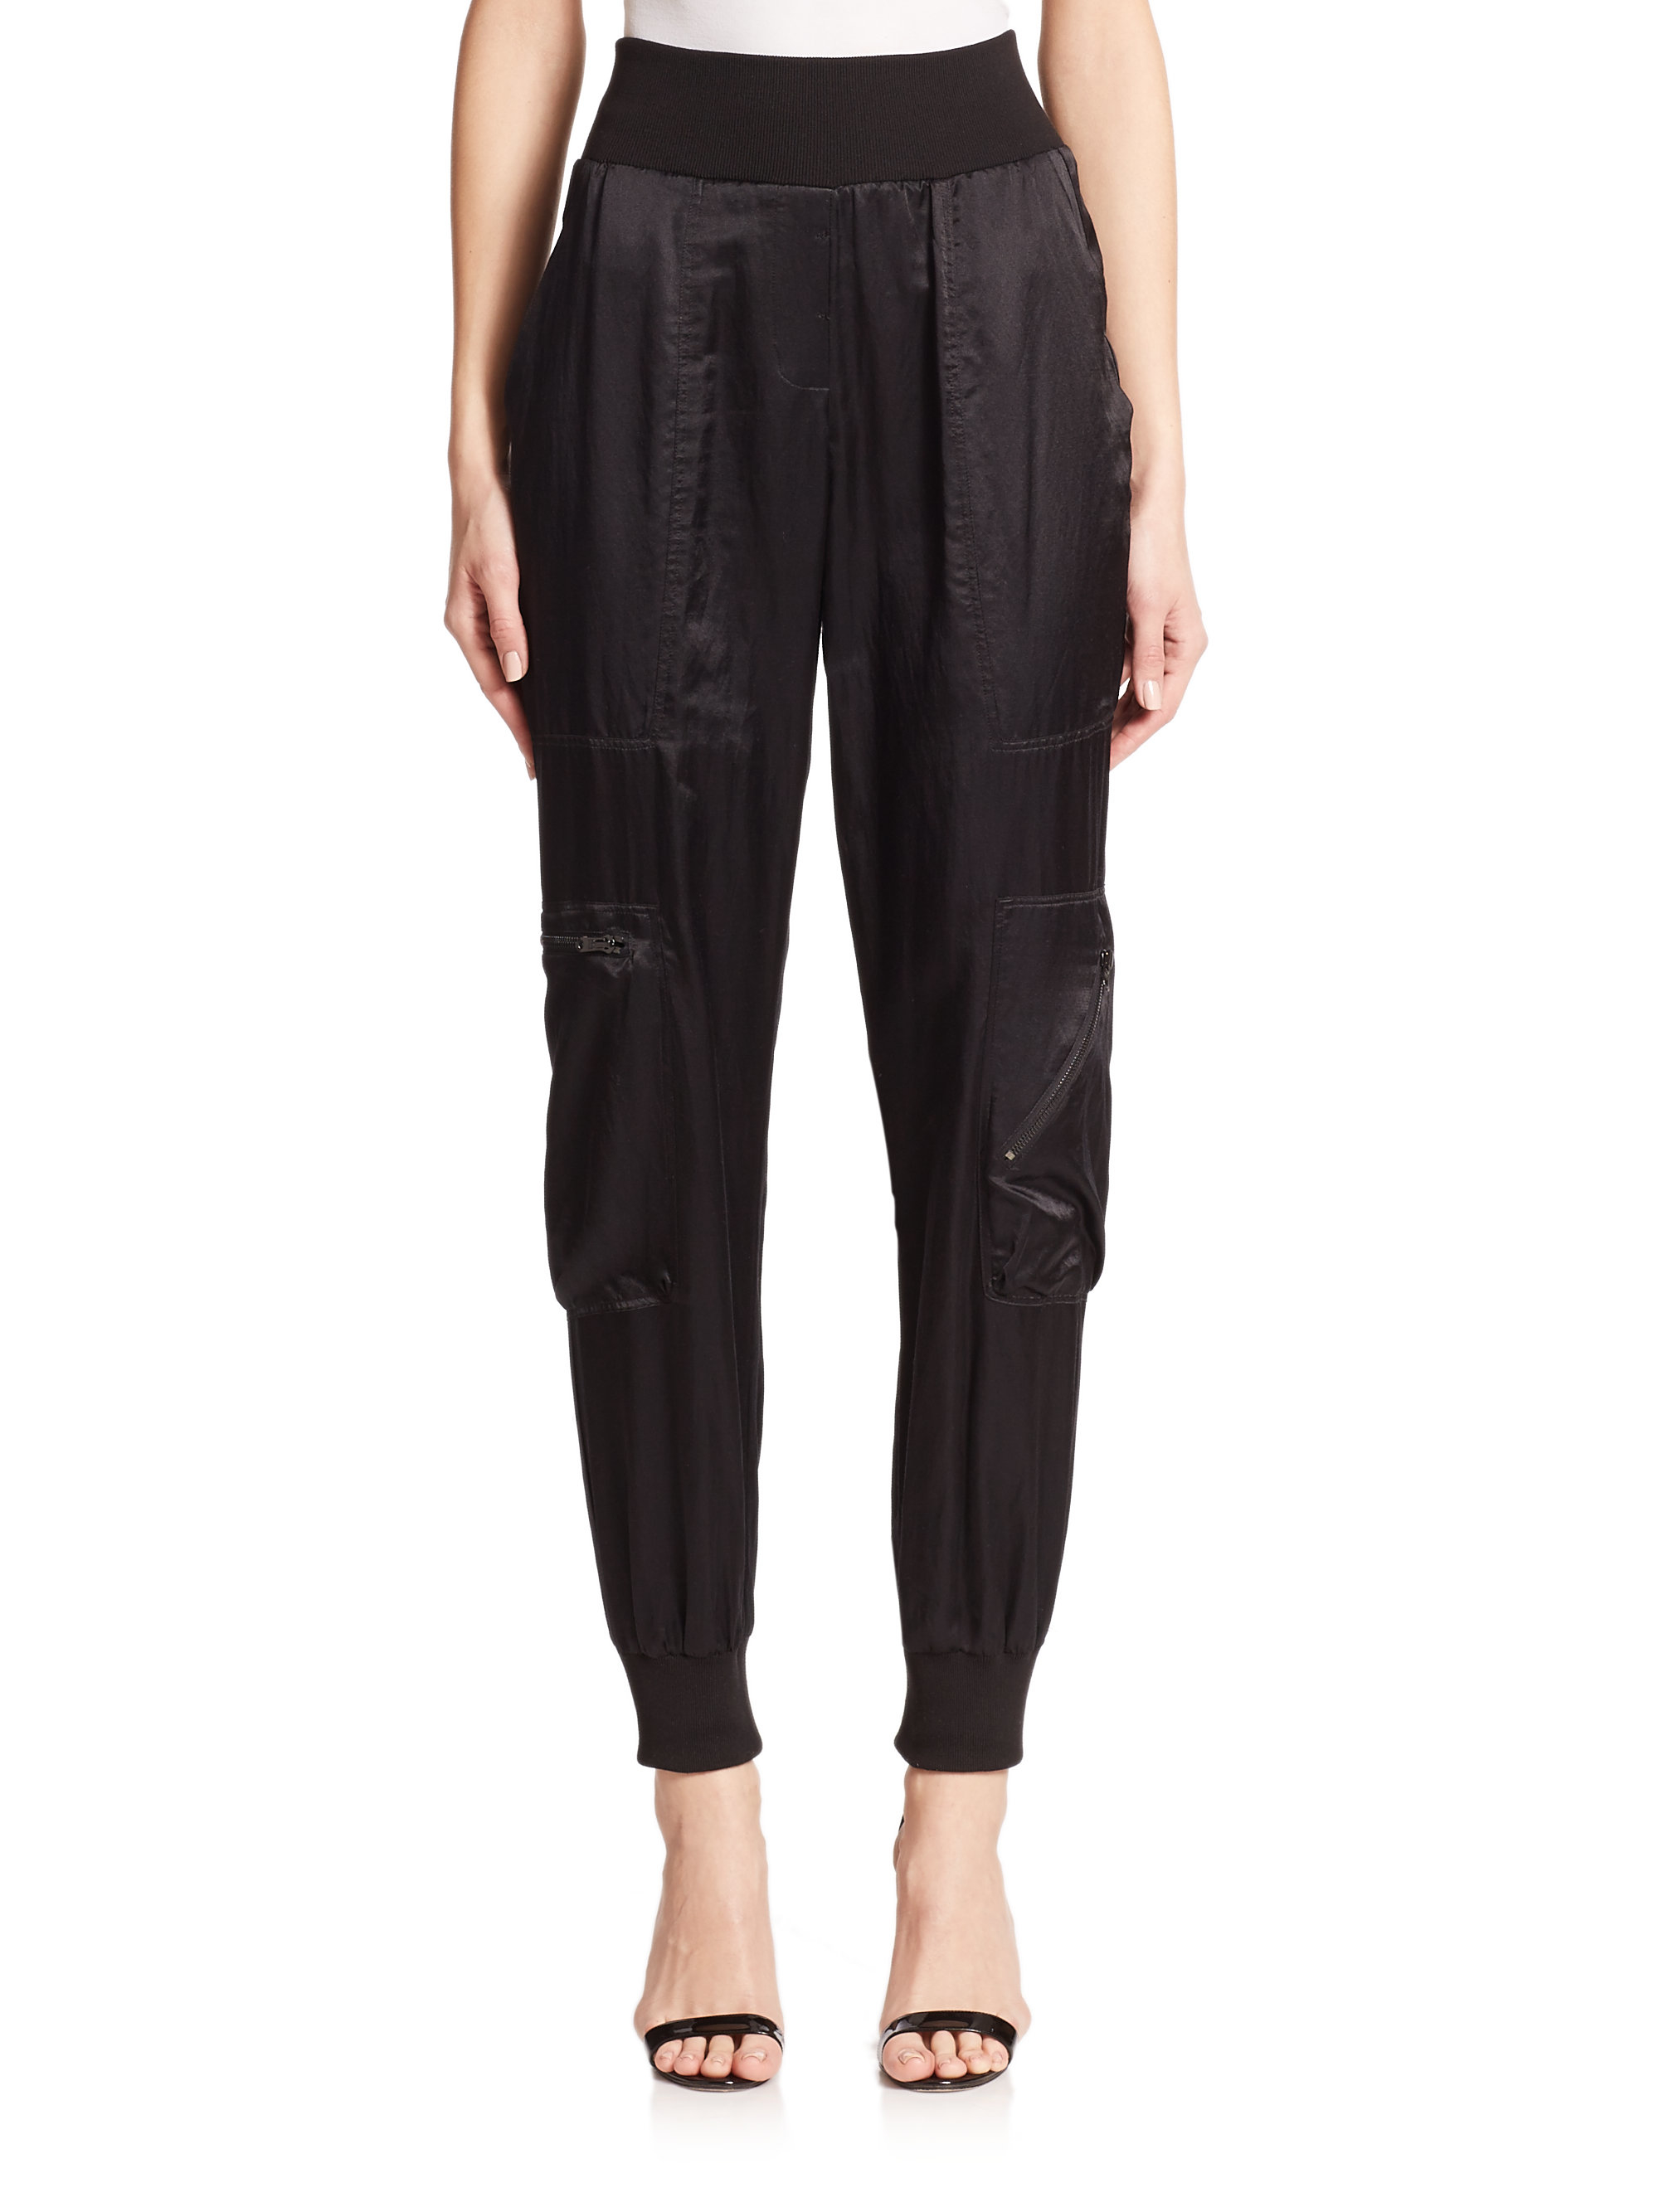 Lyst - Donna karan Silk & Cotton Cargo Pants in Black